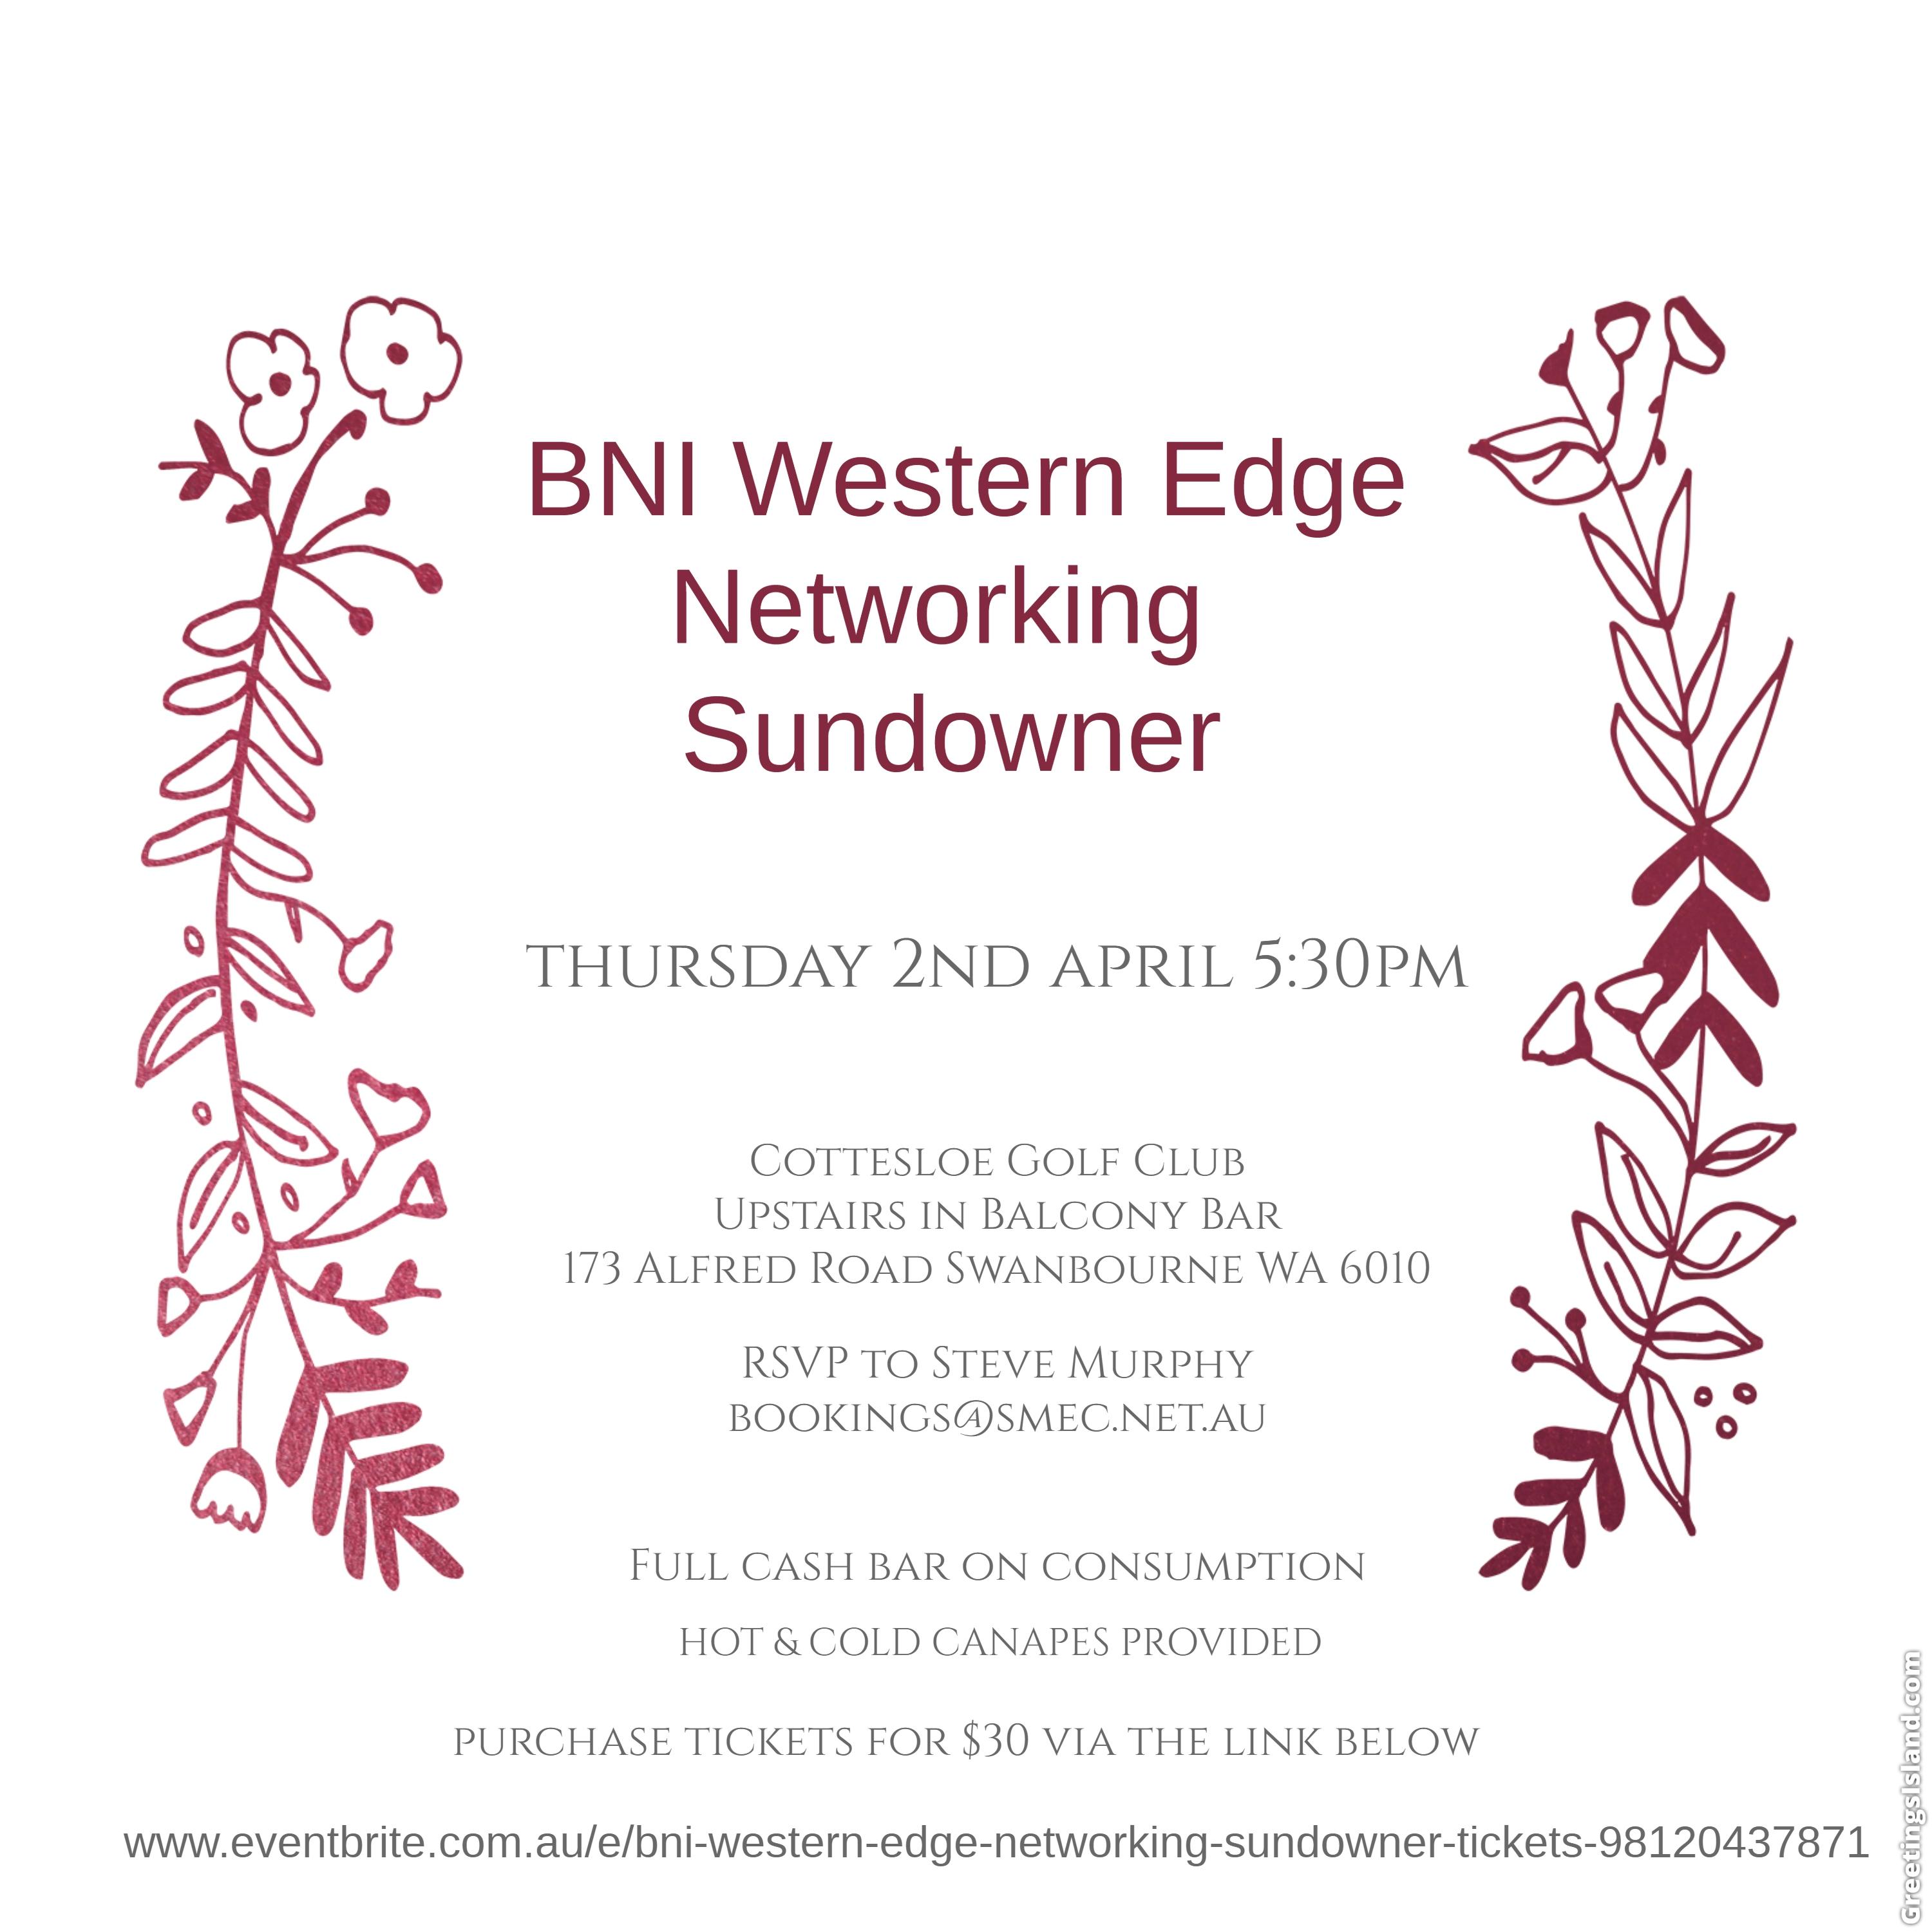 BNI Western Edge Networking Sundowner (POSTPONED DUE TO COVID-19)